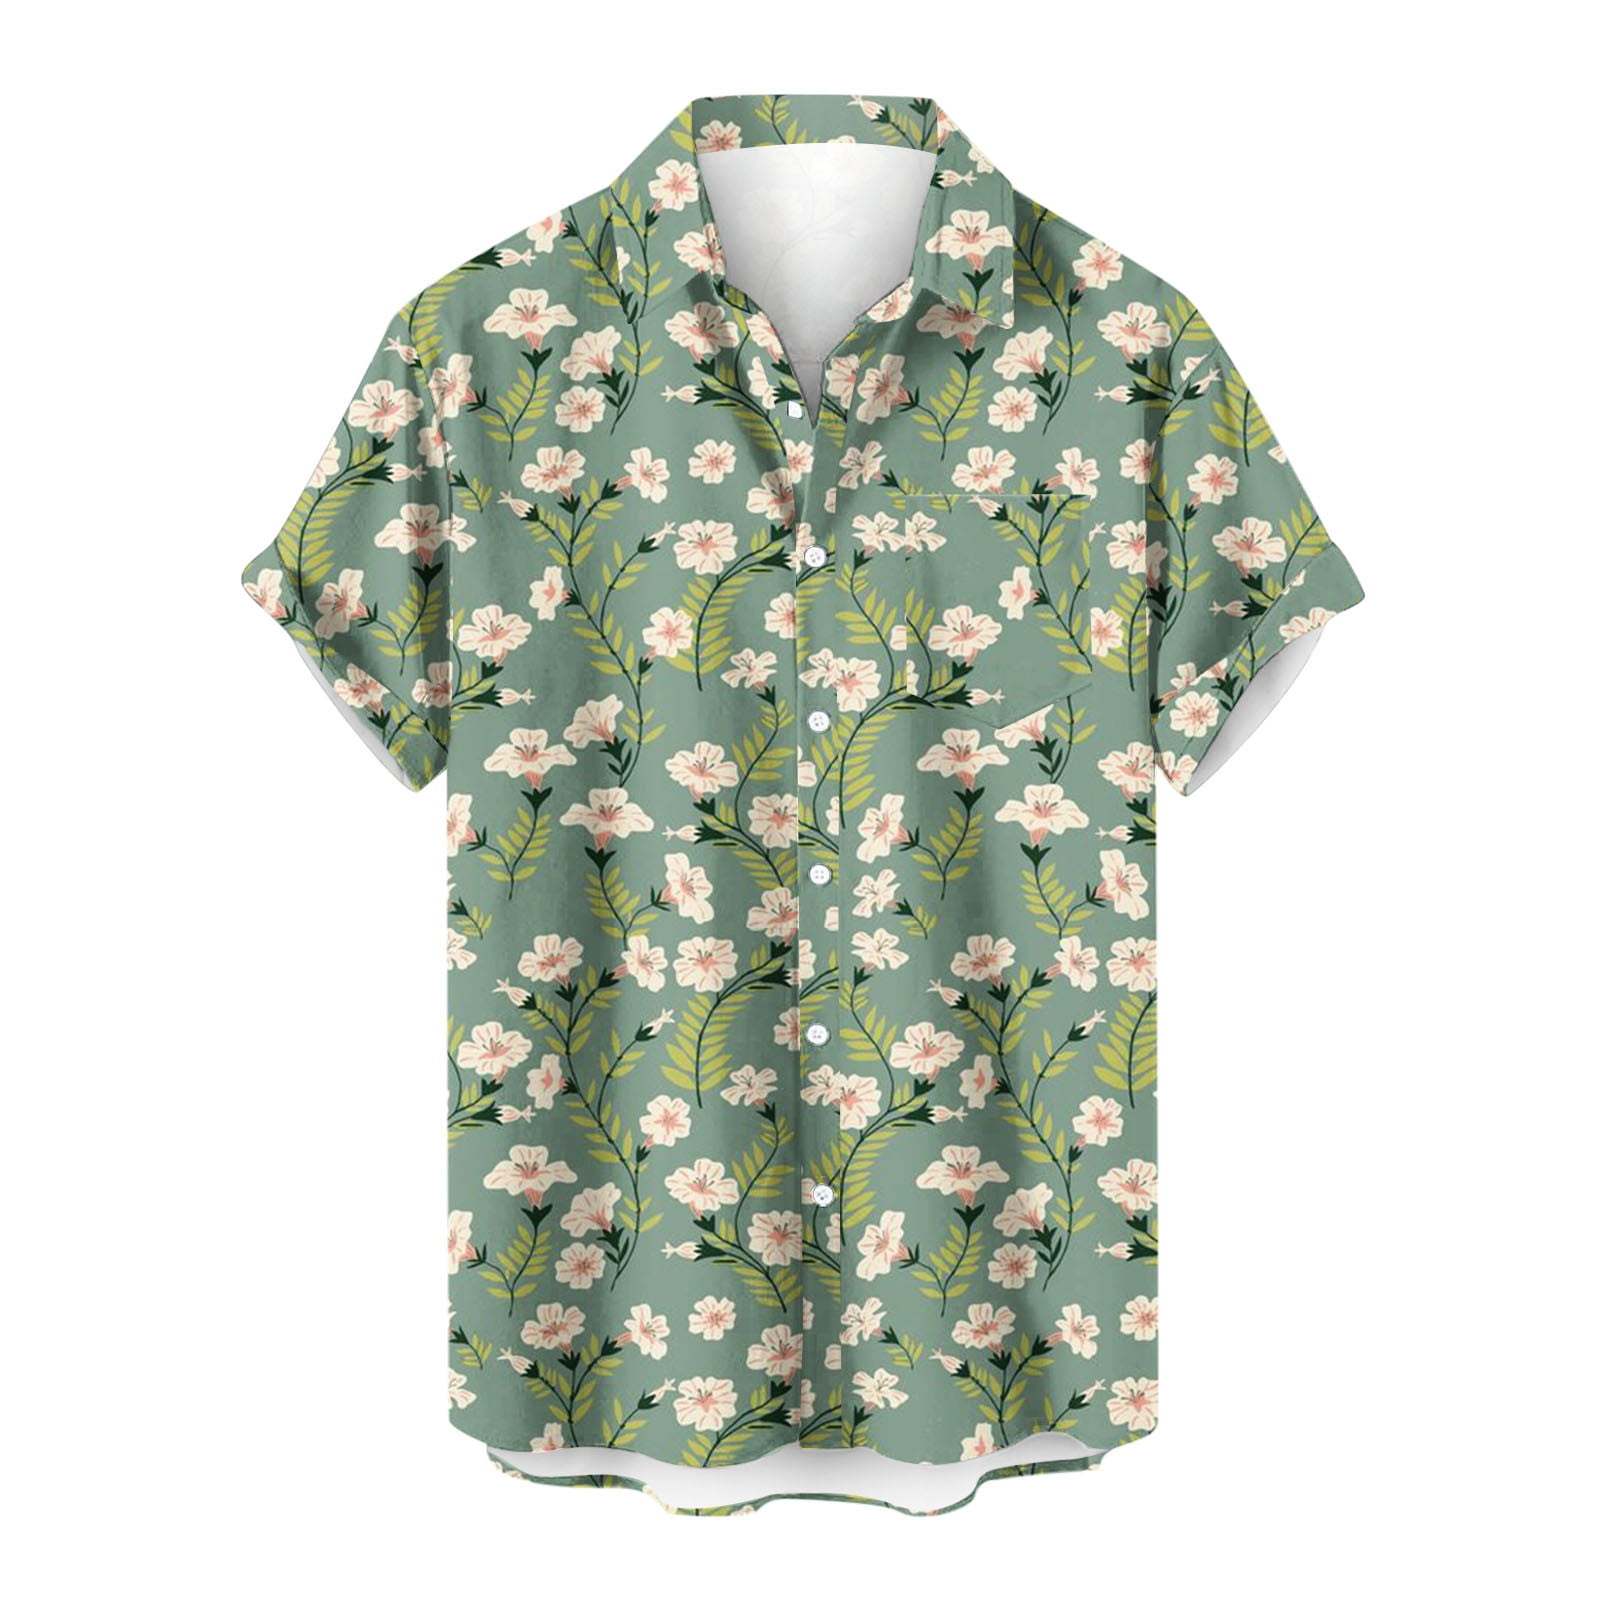 ZCFZJW Mens Casual Graphic Hawaiian Shirts Short Sleeve Button Down ...